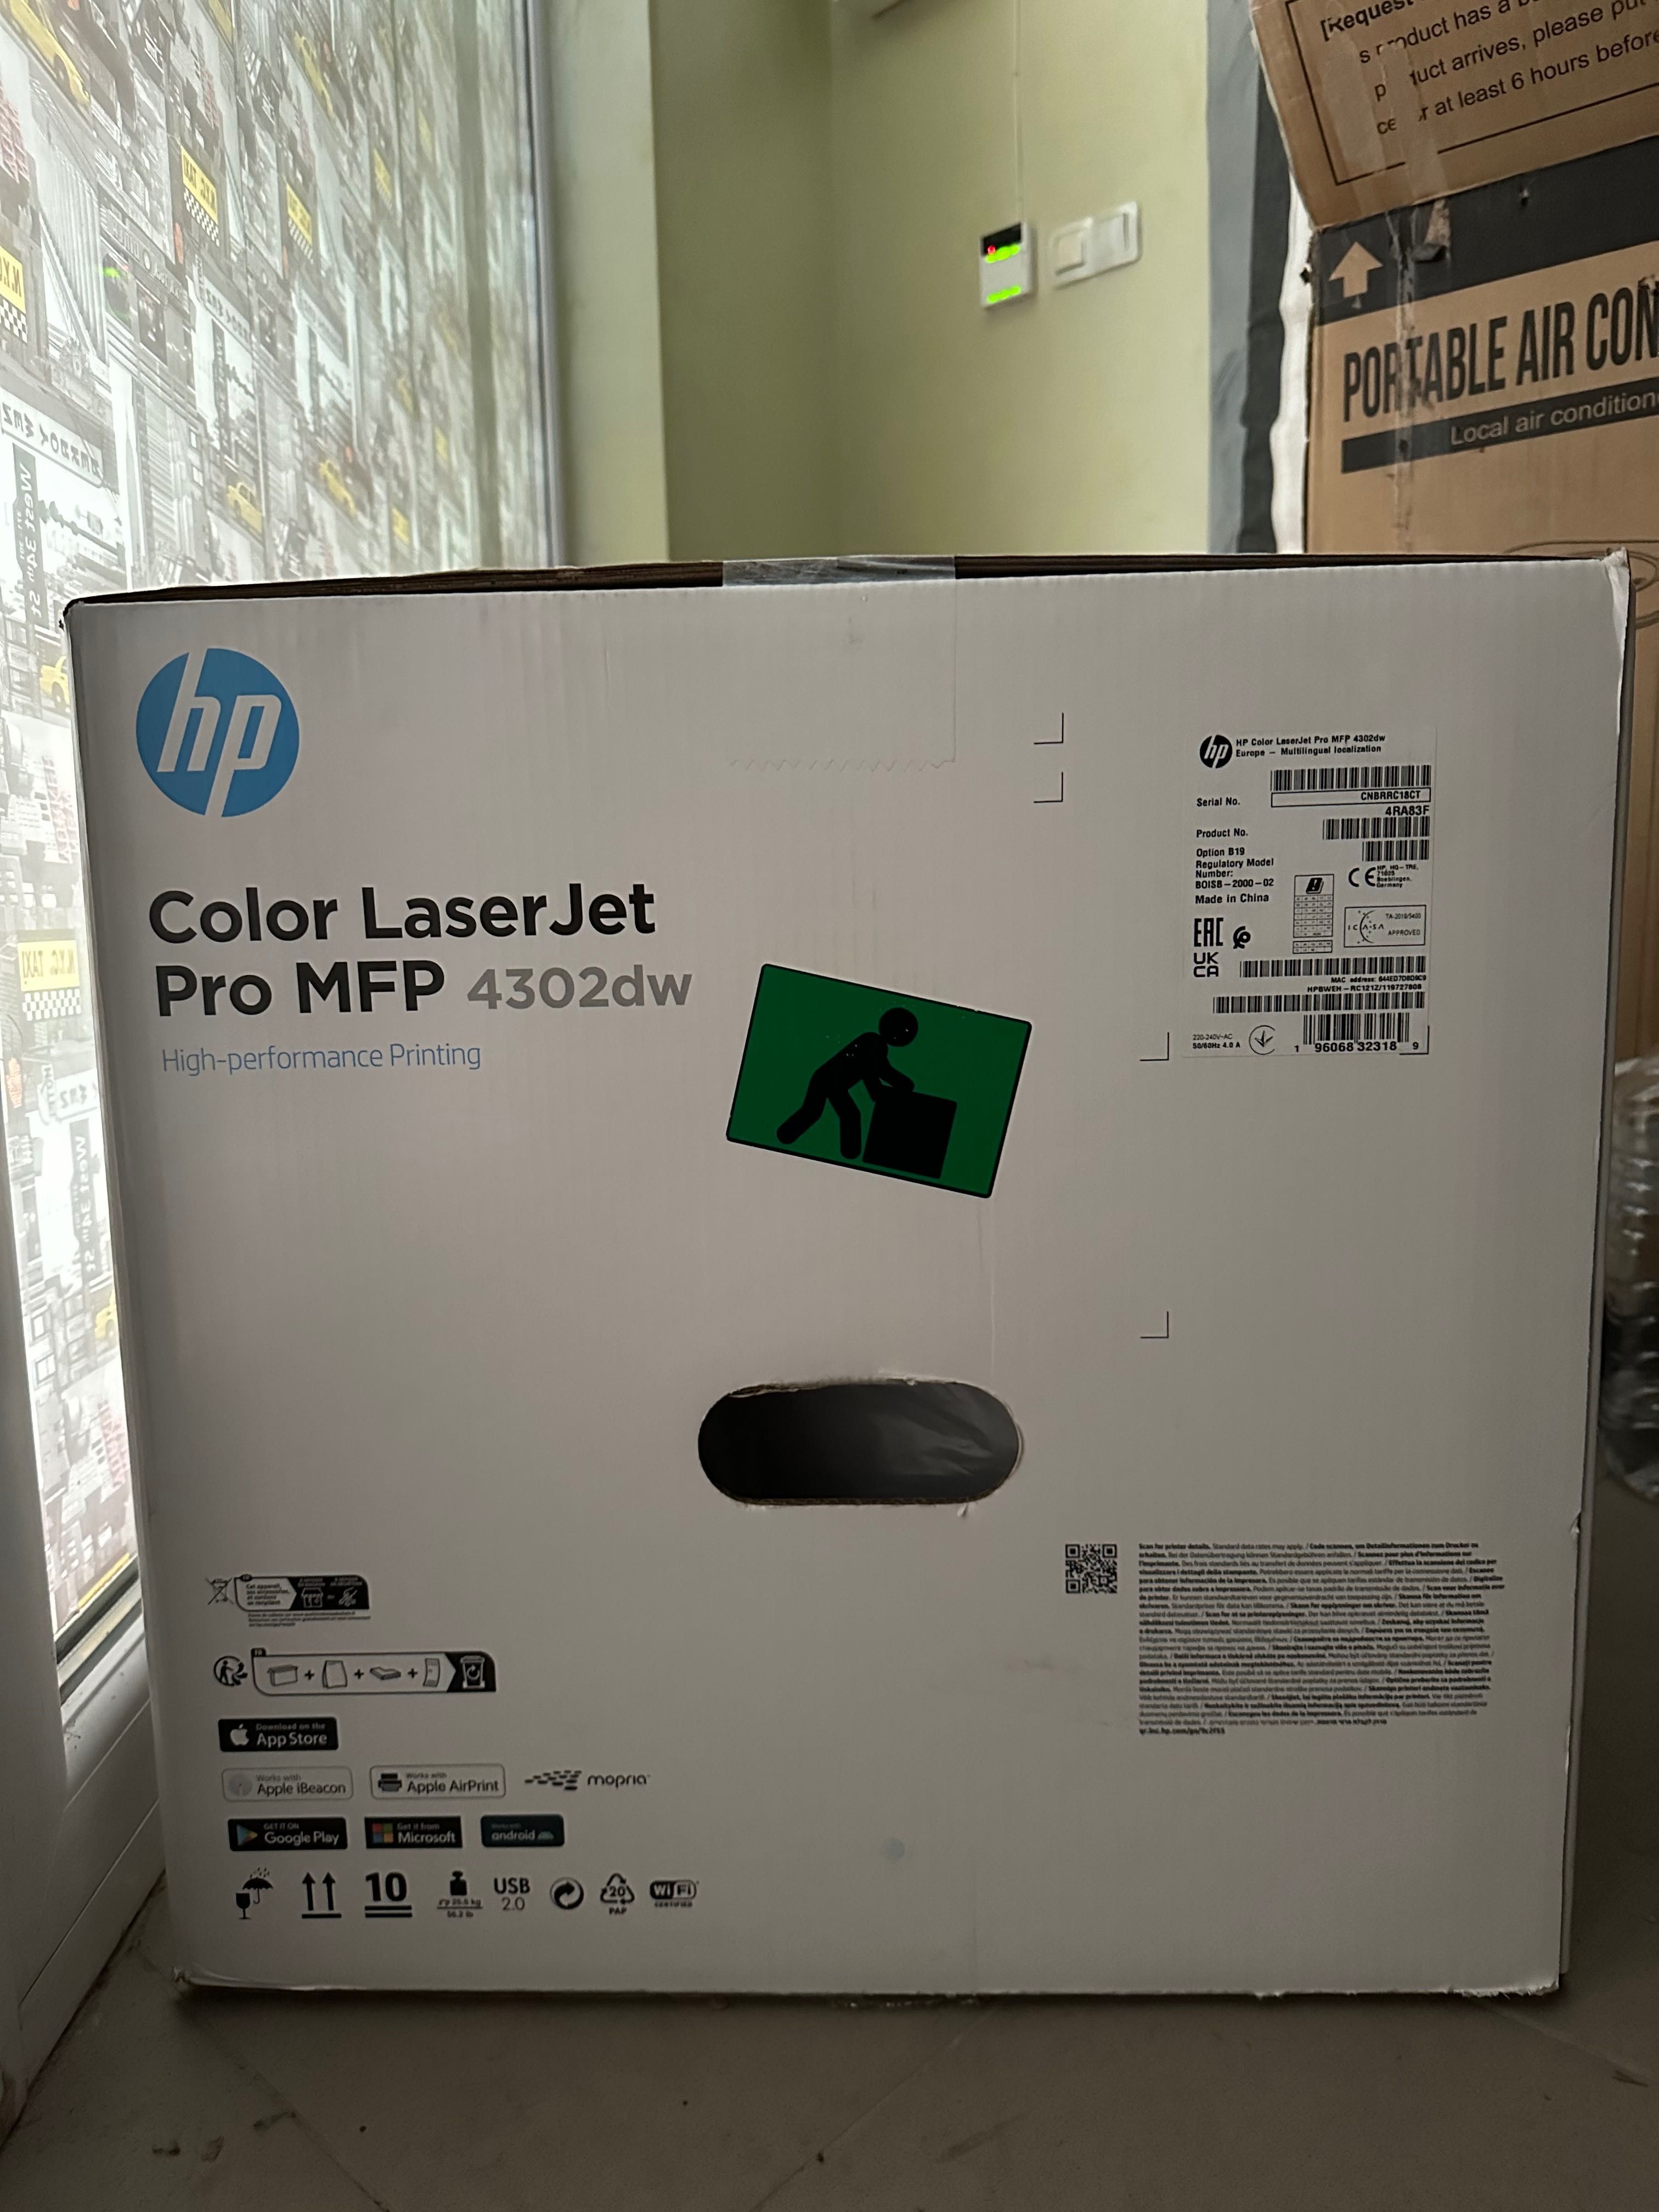 Color LaserJet
Pro MFP